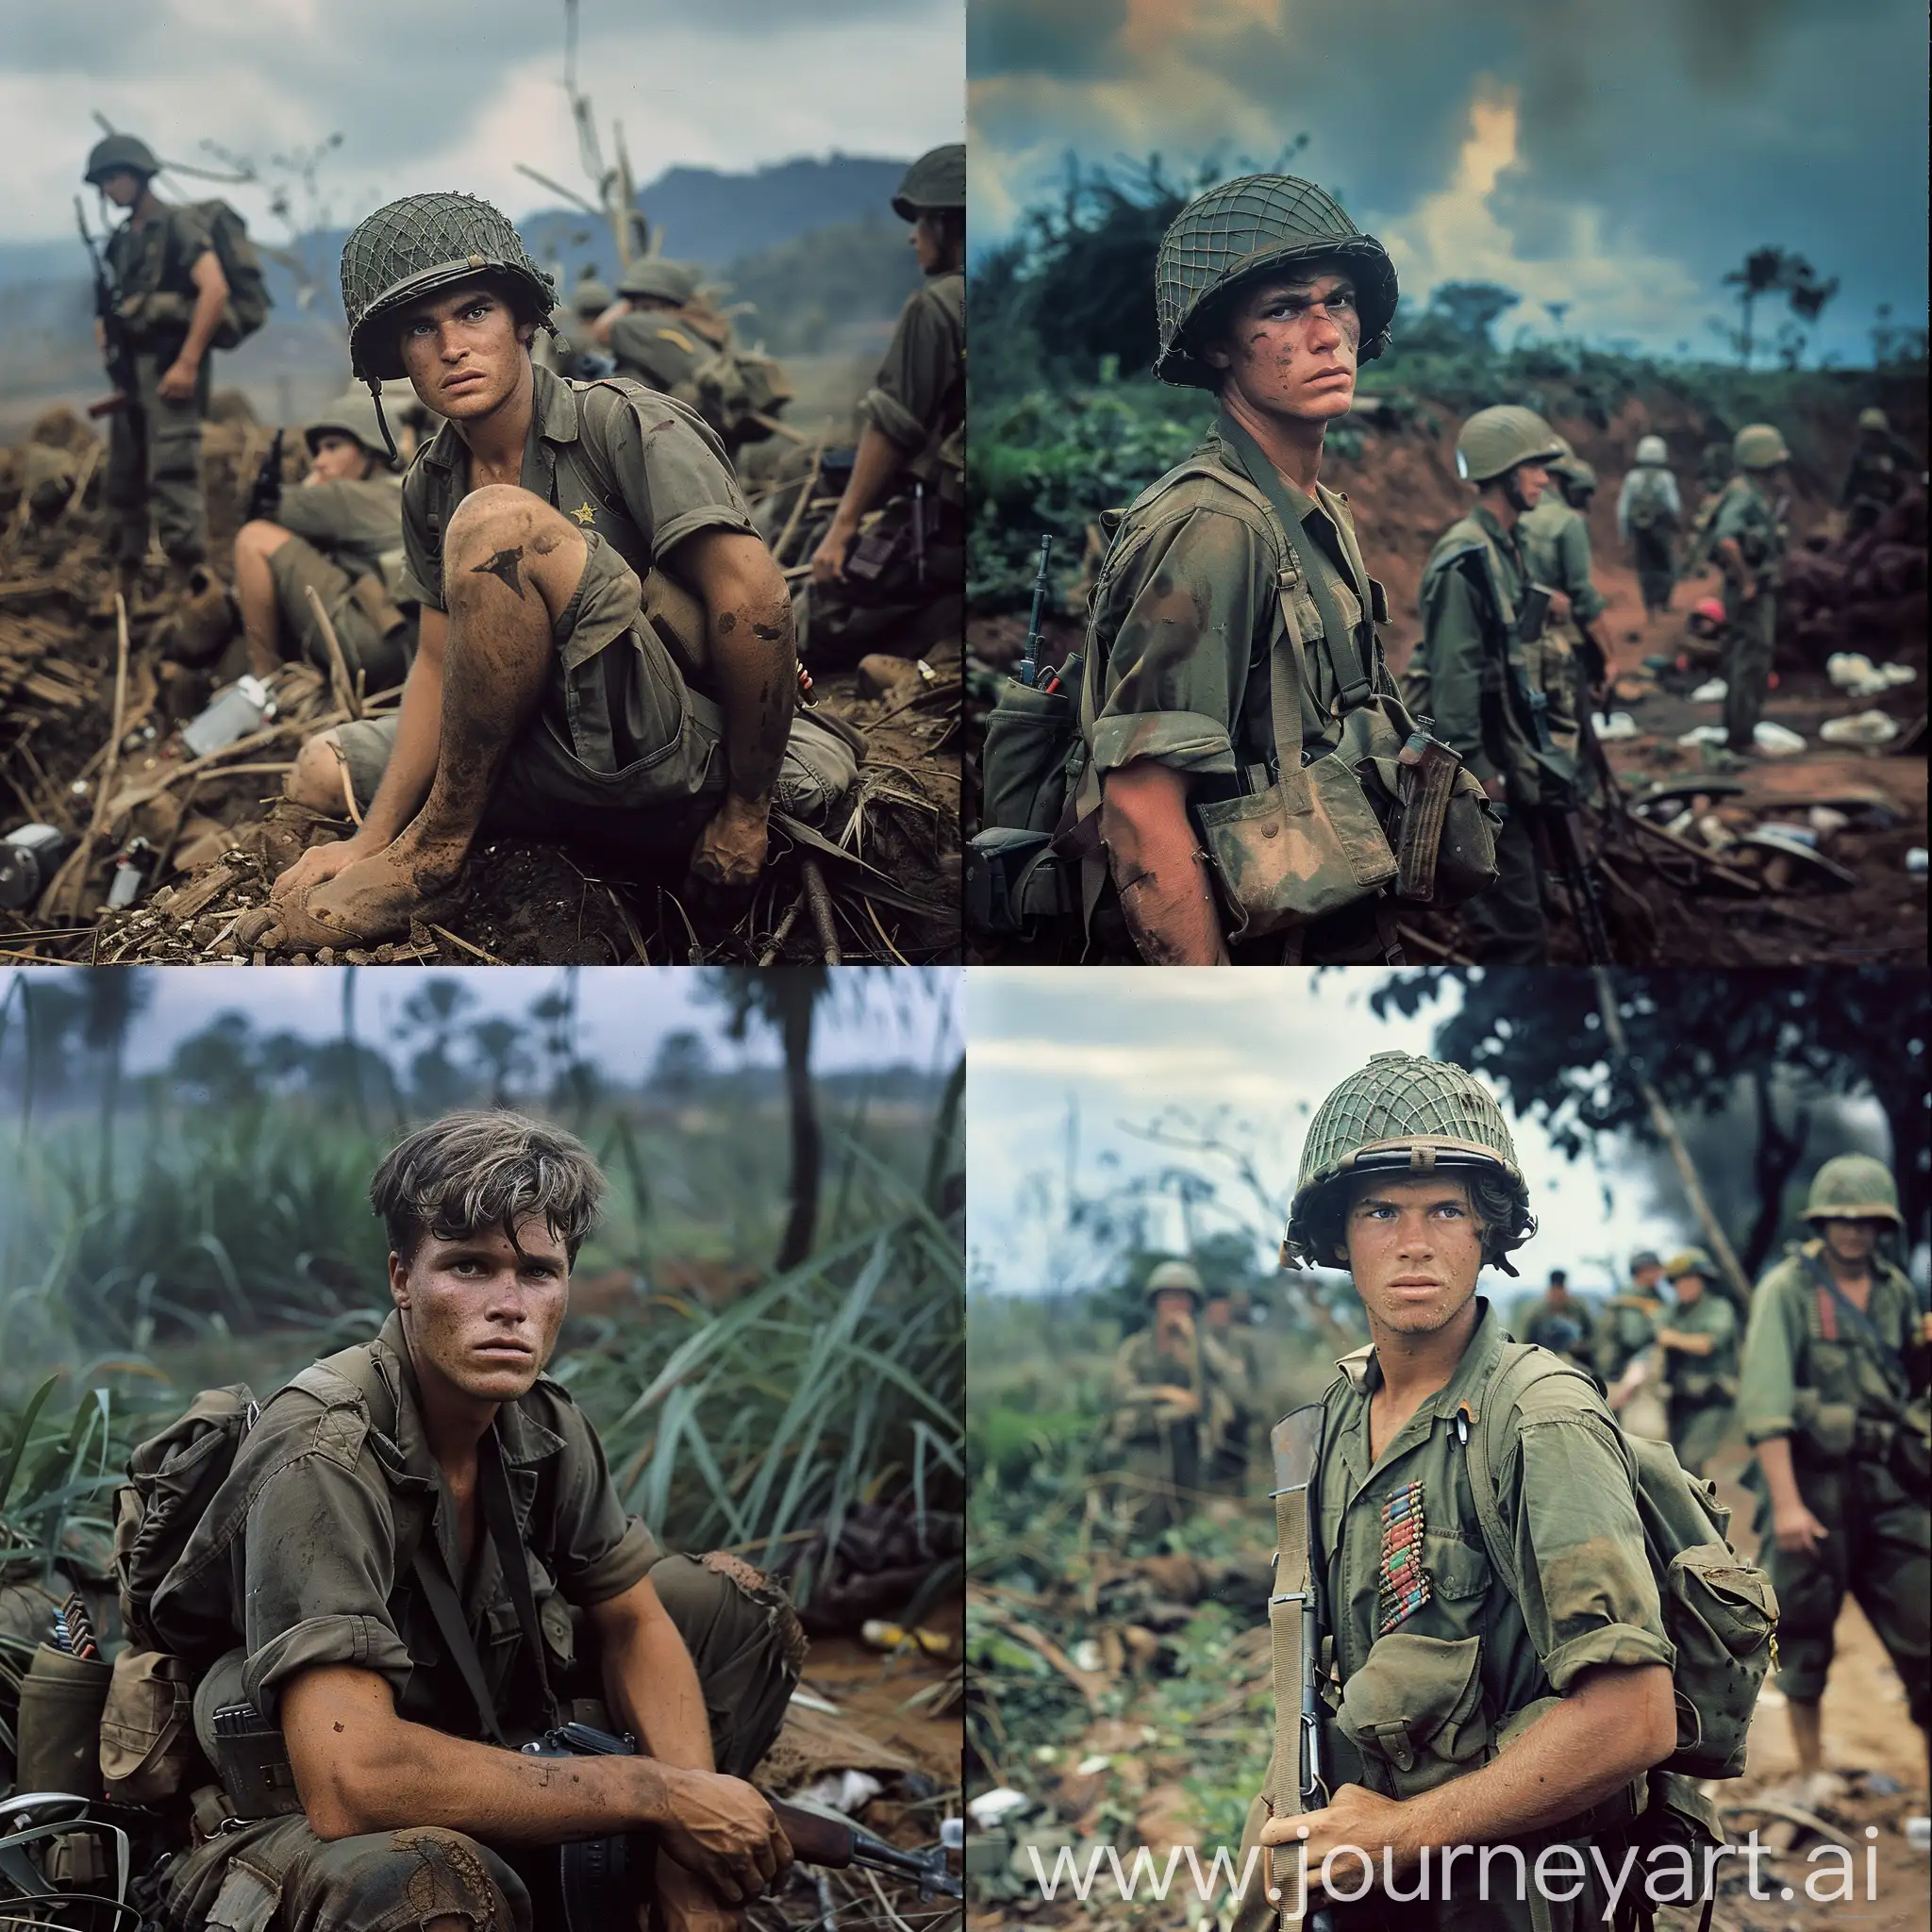 Patrick star in the Vietnam war